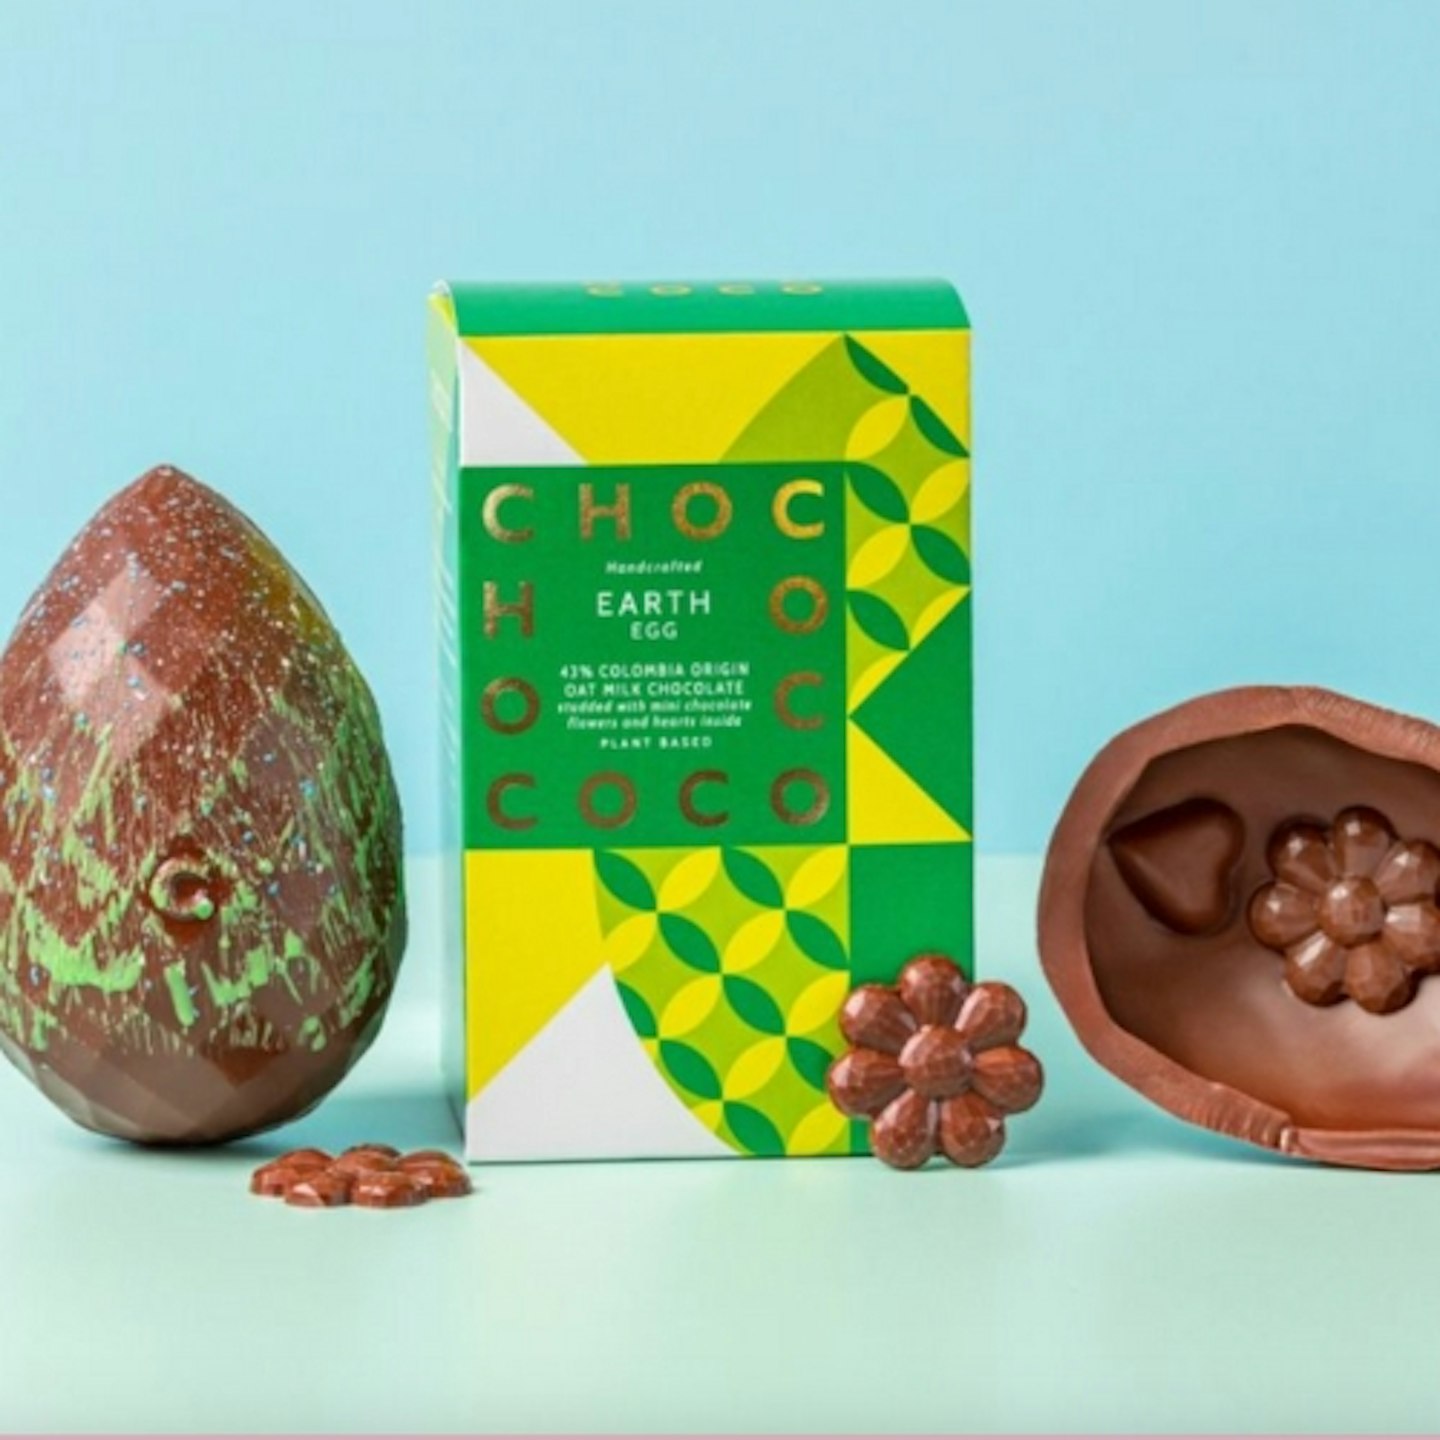 Chococo Oat M!lk Chocolate Earth Easter Egg (vf) - 175g